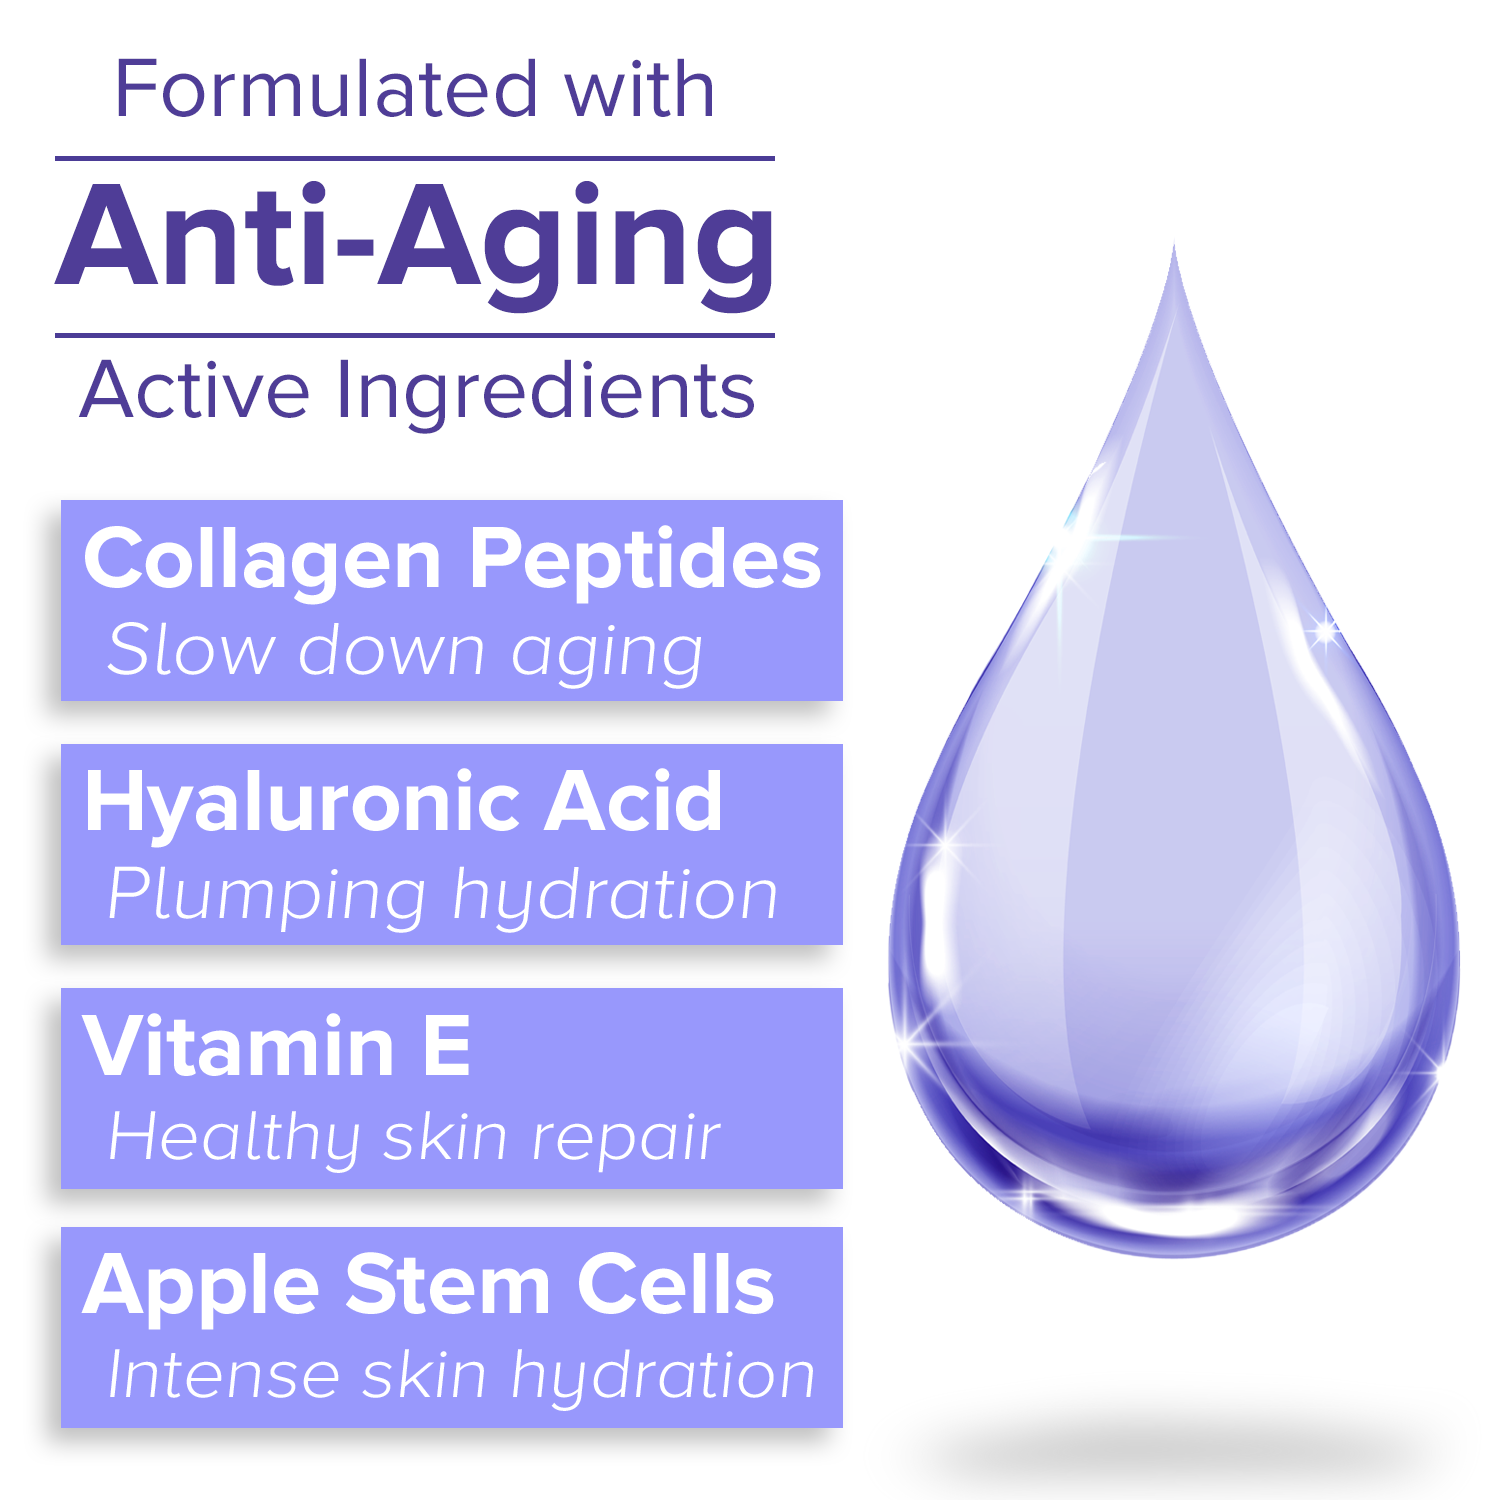 Collagen Anti-Wrinkle Cream